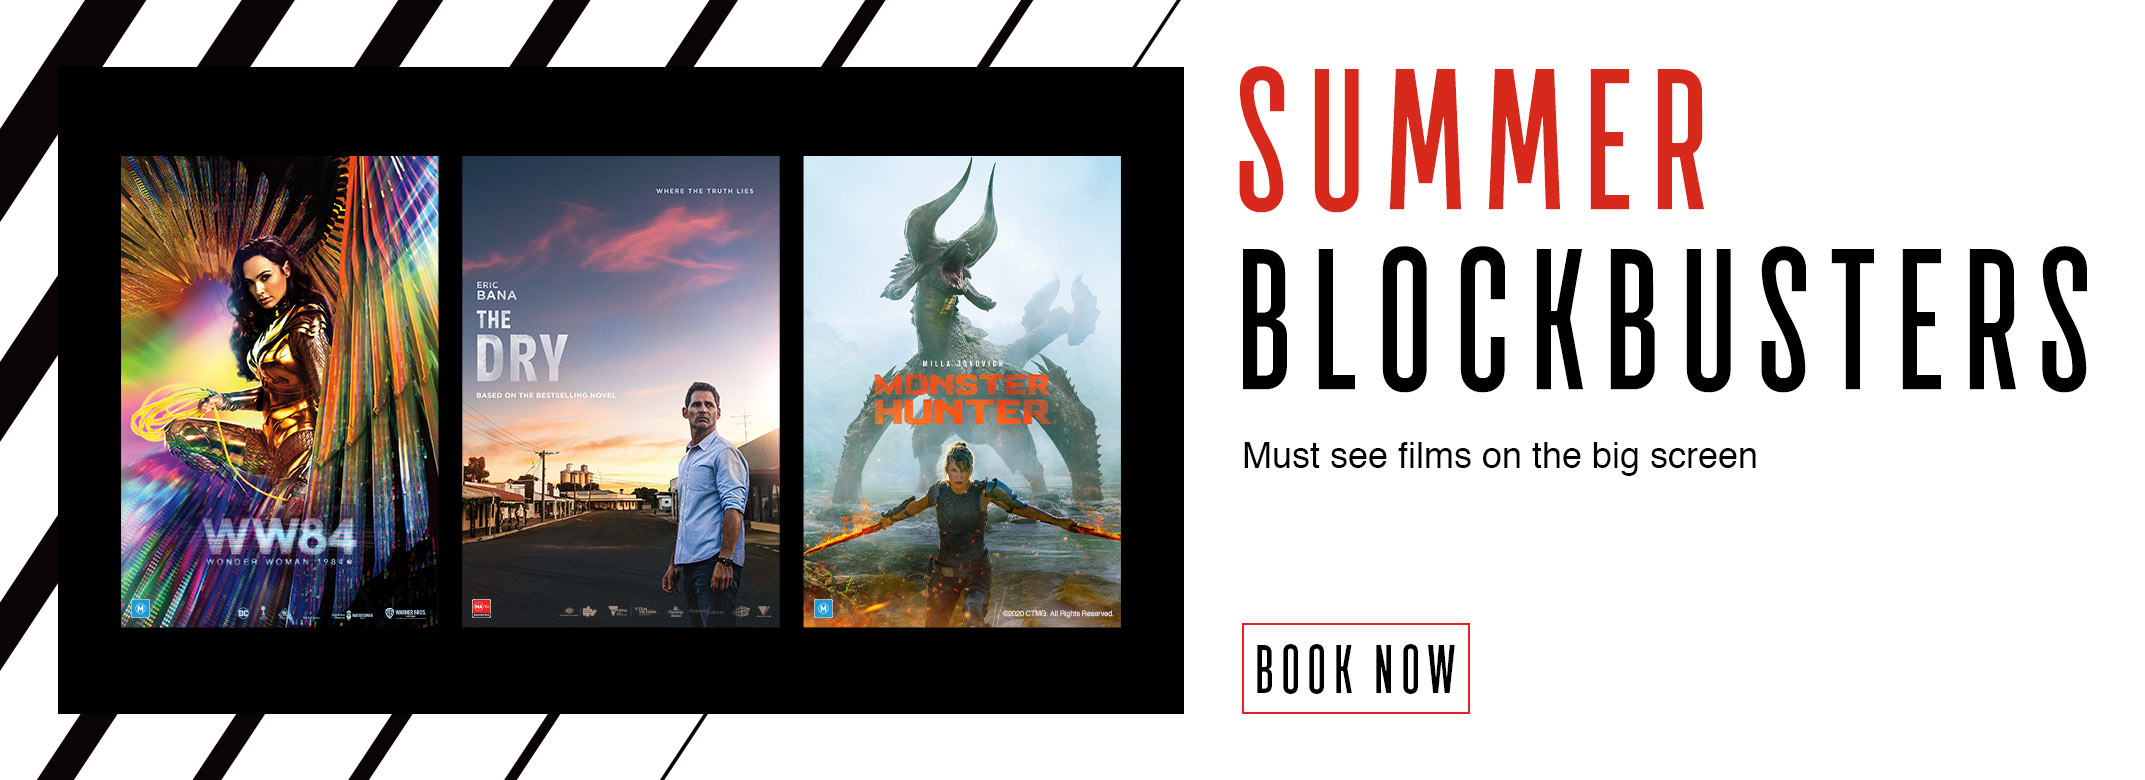 Summer Blockbusters Event Cinemas